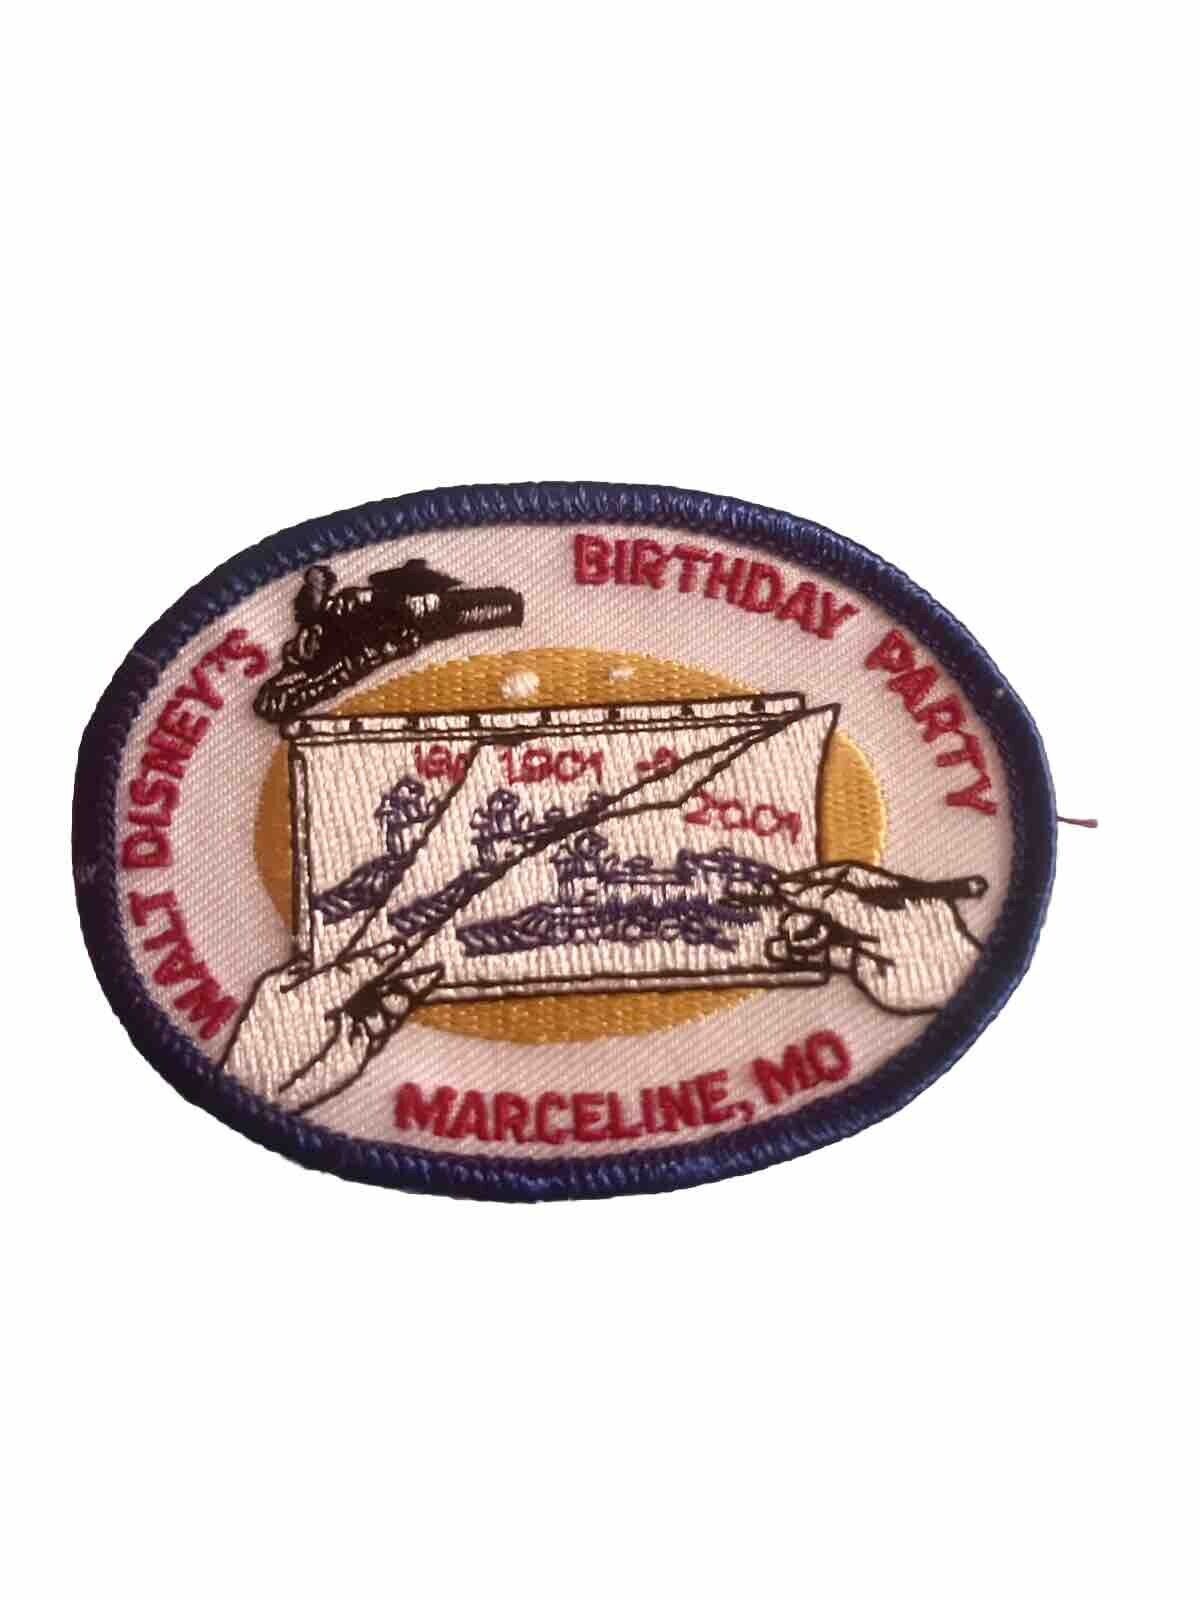 Rare Walt Disneys 100th Bday Hometown Celebration Patch Marceline Missouri